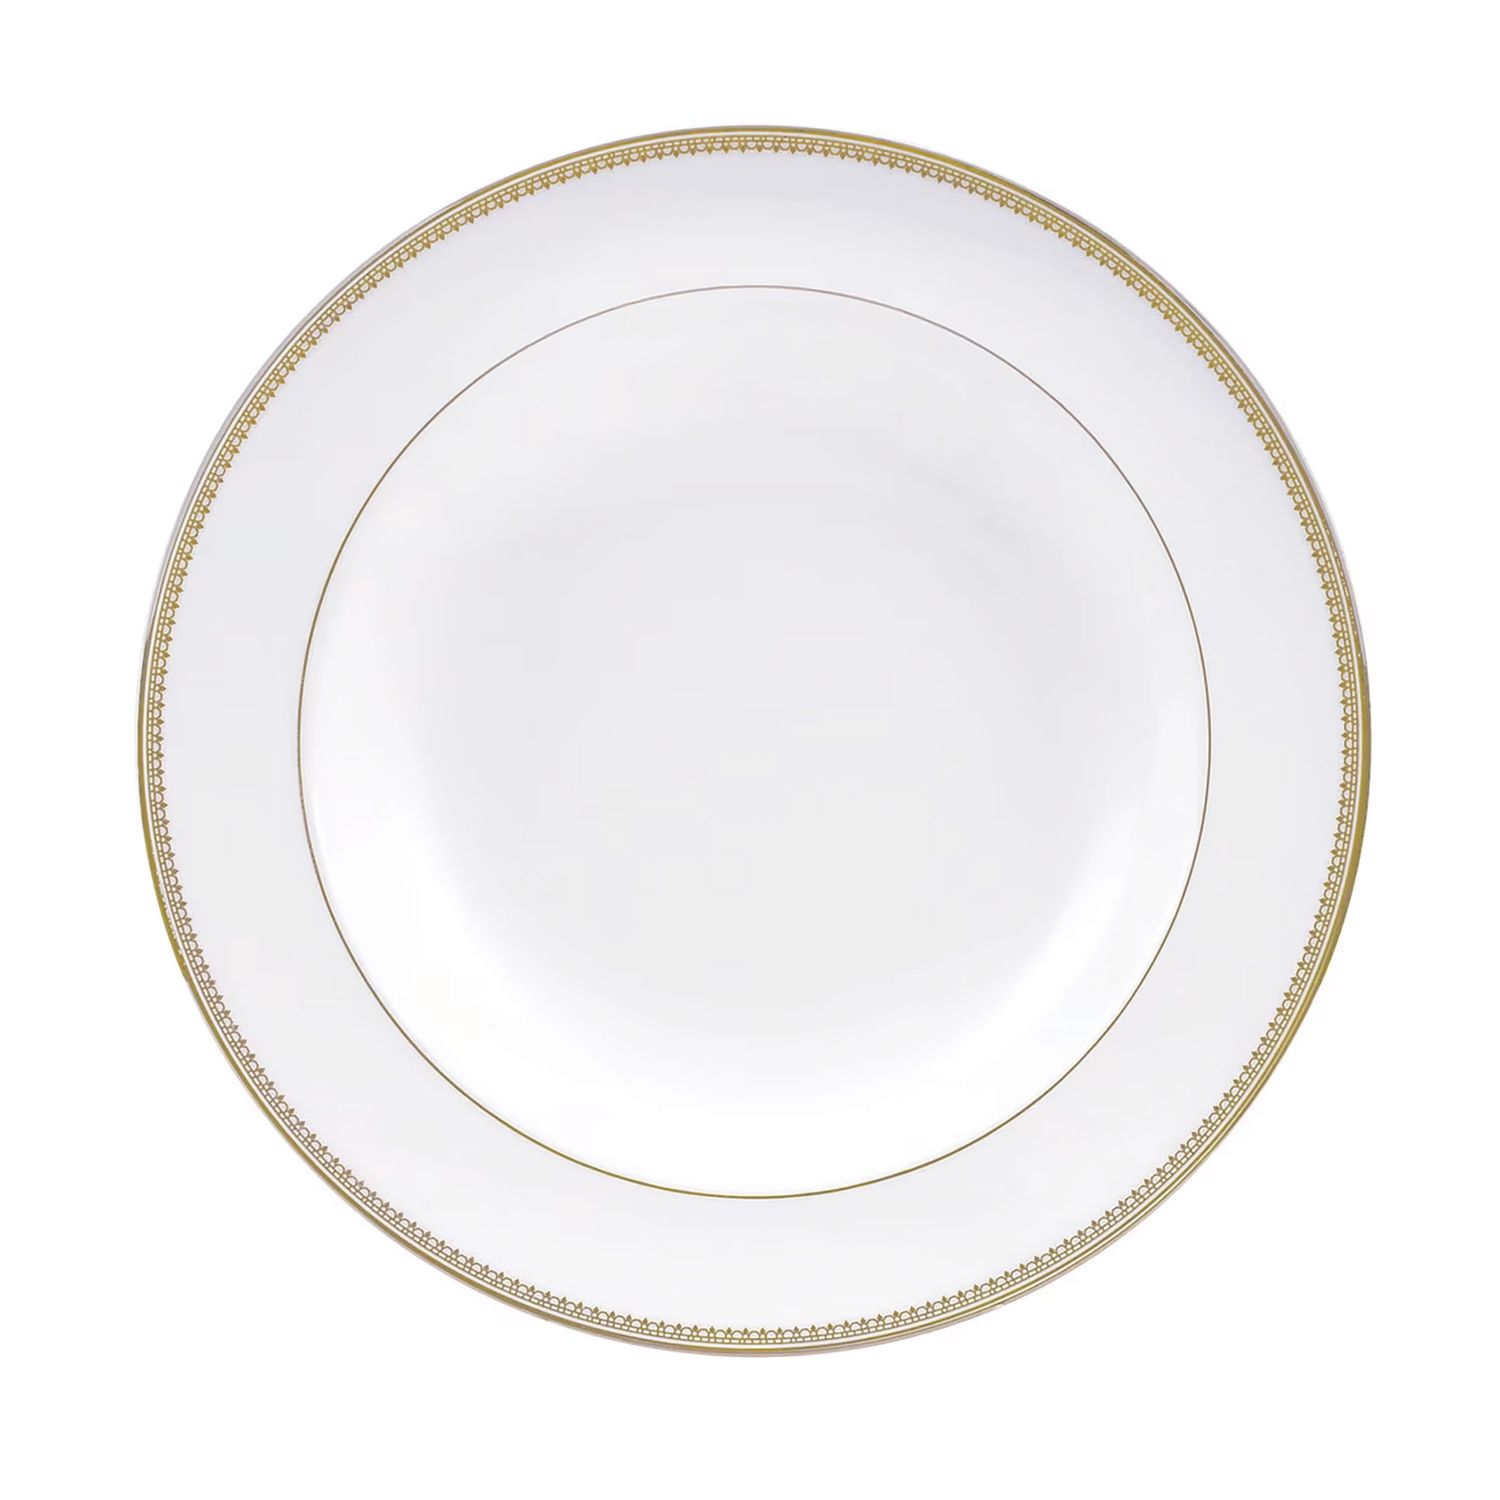 Wedgwood Vera Wang Lace Gold Rim Soup Plate 22.8cm 8.9 Inch 50146901012